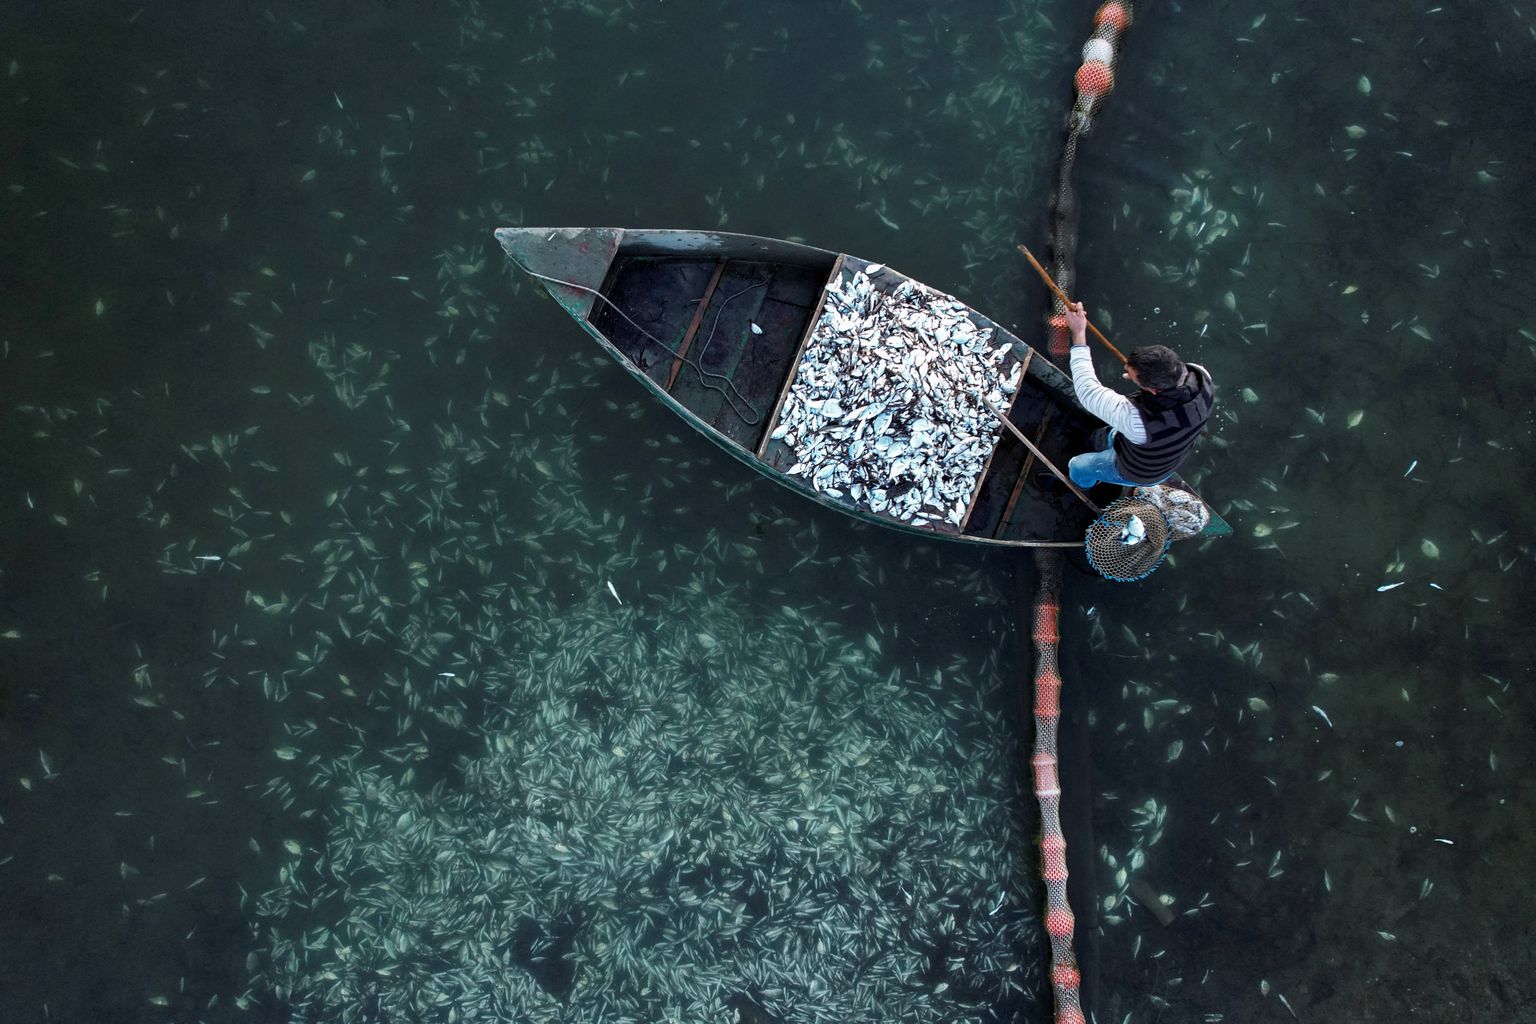 Kreeka Igoumenitsa kalakasvataja Ioannis Ouzounoglou korjamas kokku külma tõttu surnud kalu